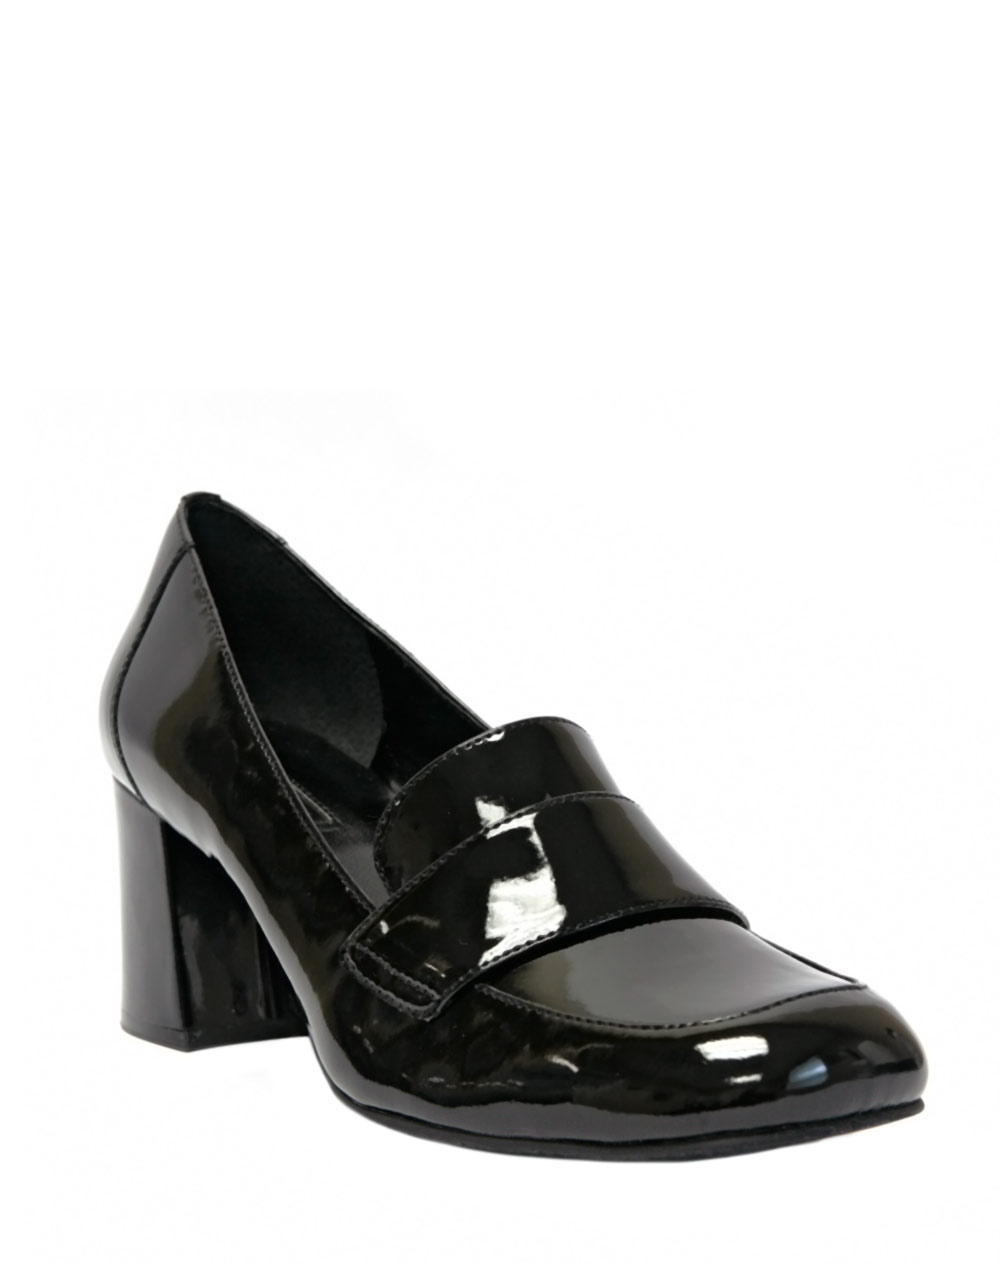 Tahari Lisa Black Patent Leather Loafers in Black | Lyst